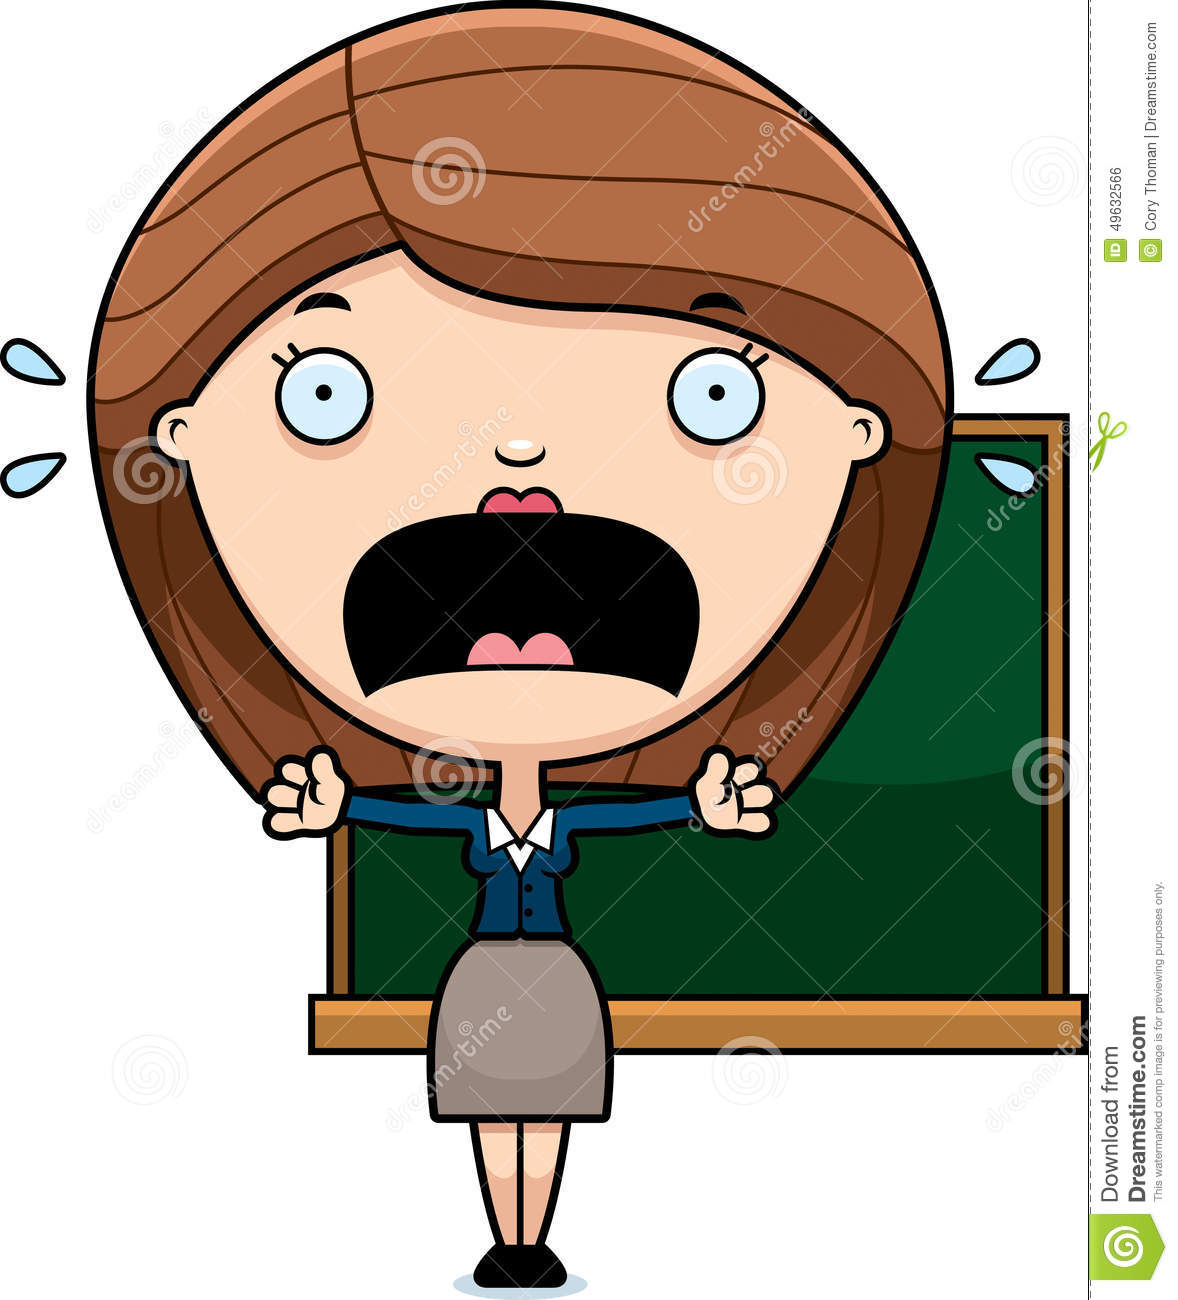 Cartoon Illustration Of A Teacher Looking Scared